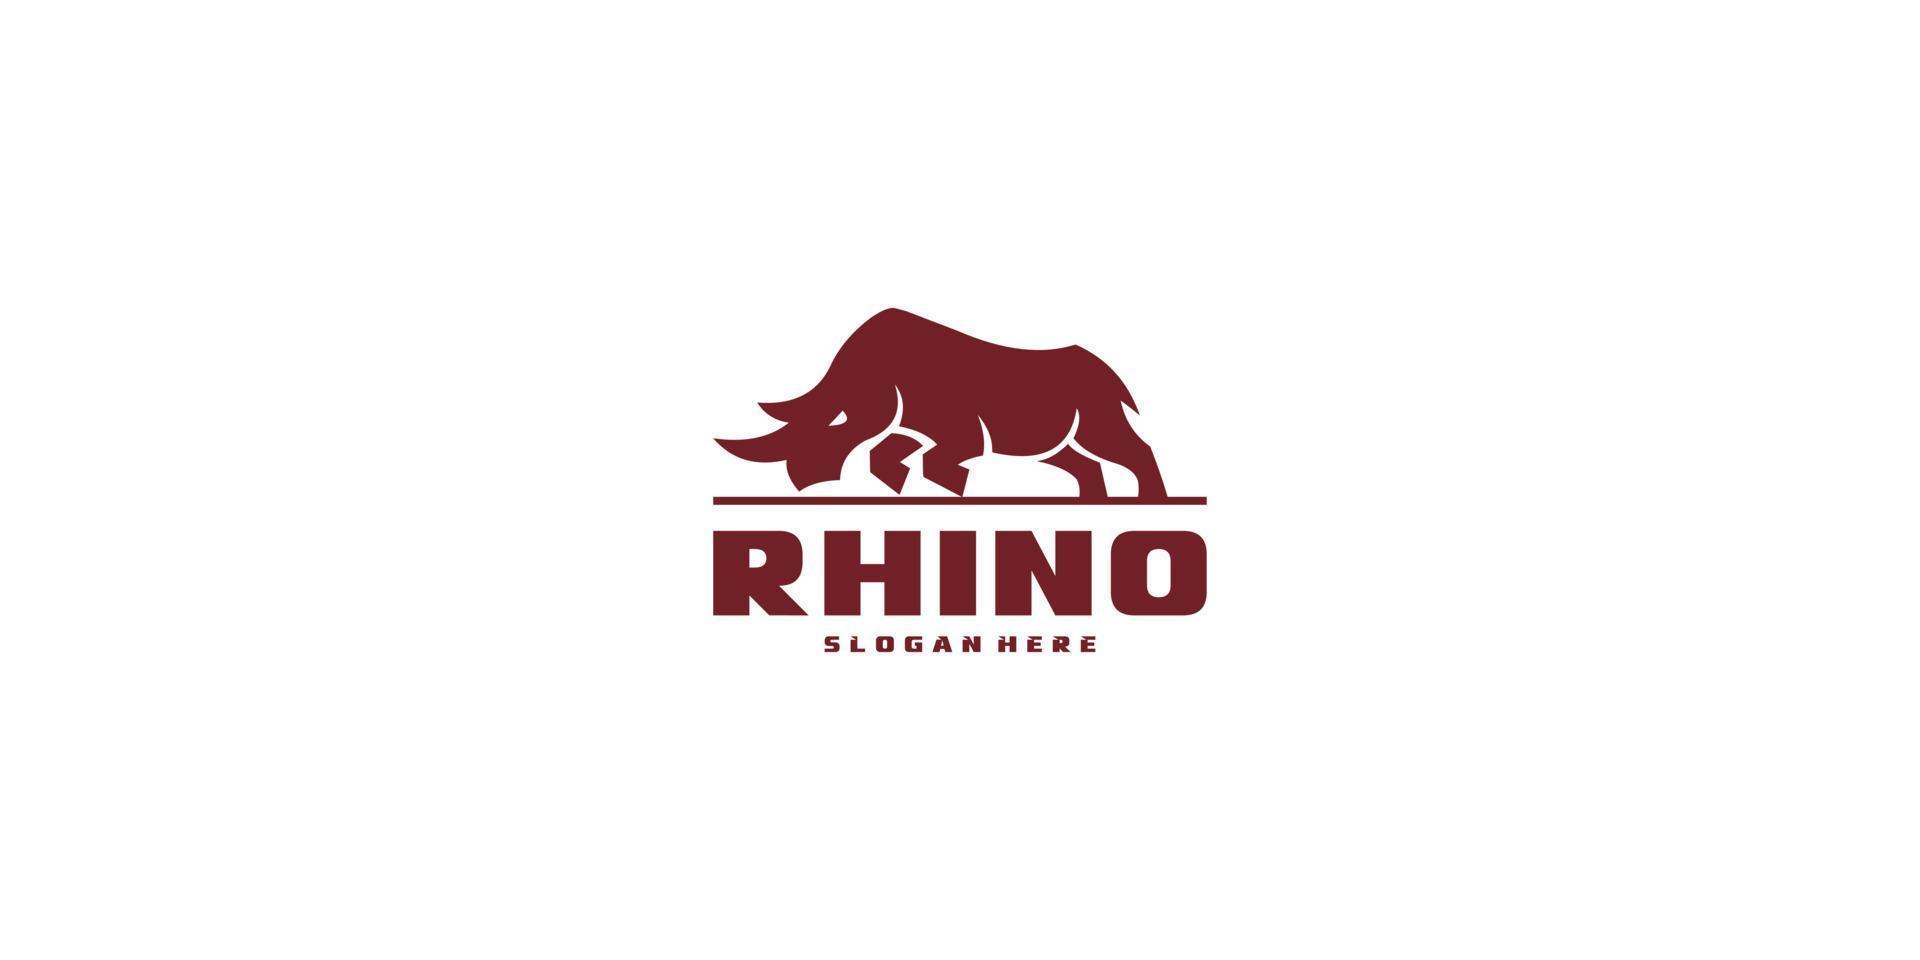 Rhino animal logo vector design